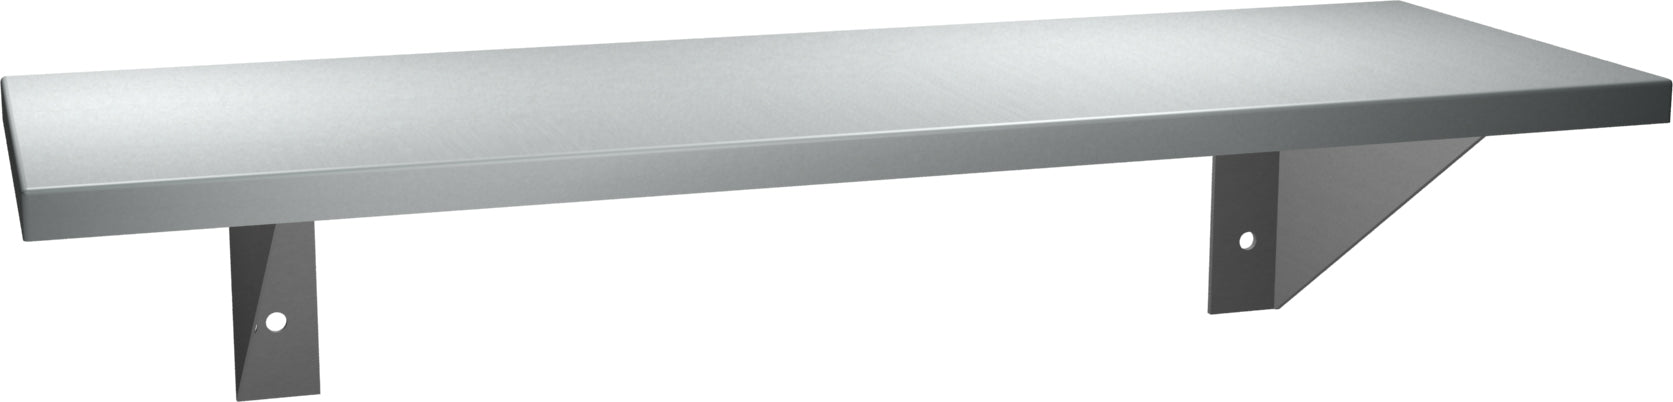 ASI 0692-536 Shelf, Stainless Steel, 5 X 36 Inch